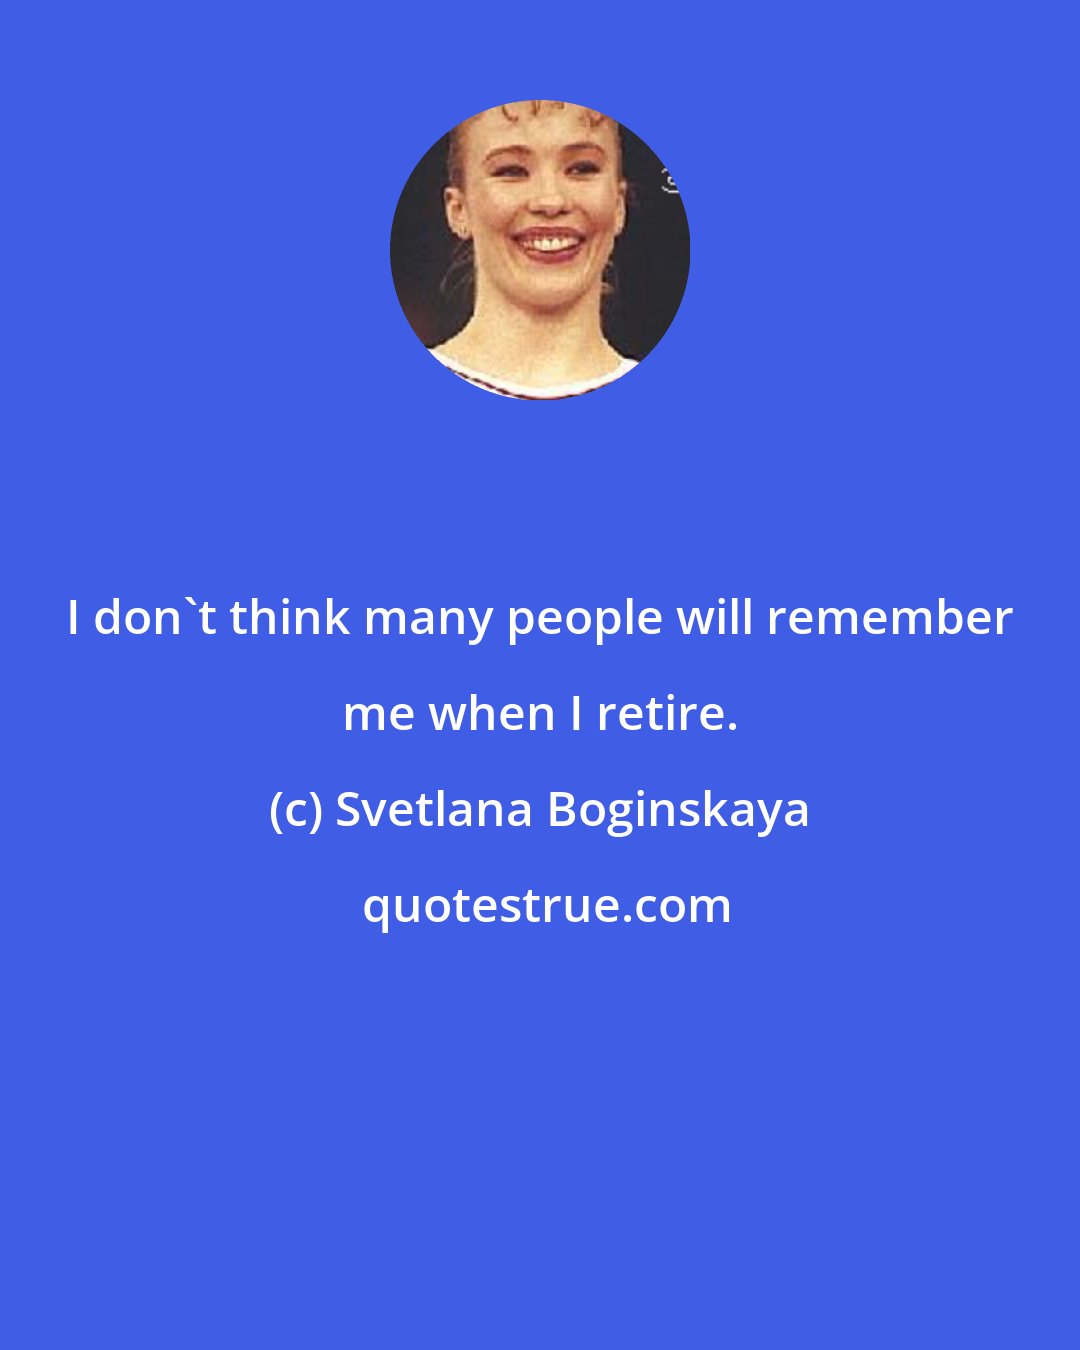 Svetlana Boginskaya: I don't think many people will remember me when I retire.